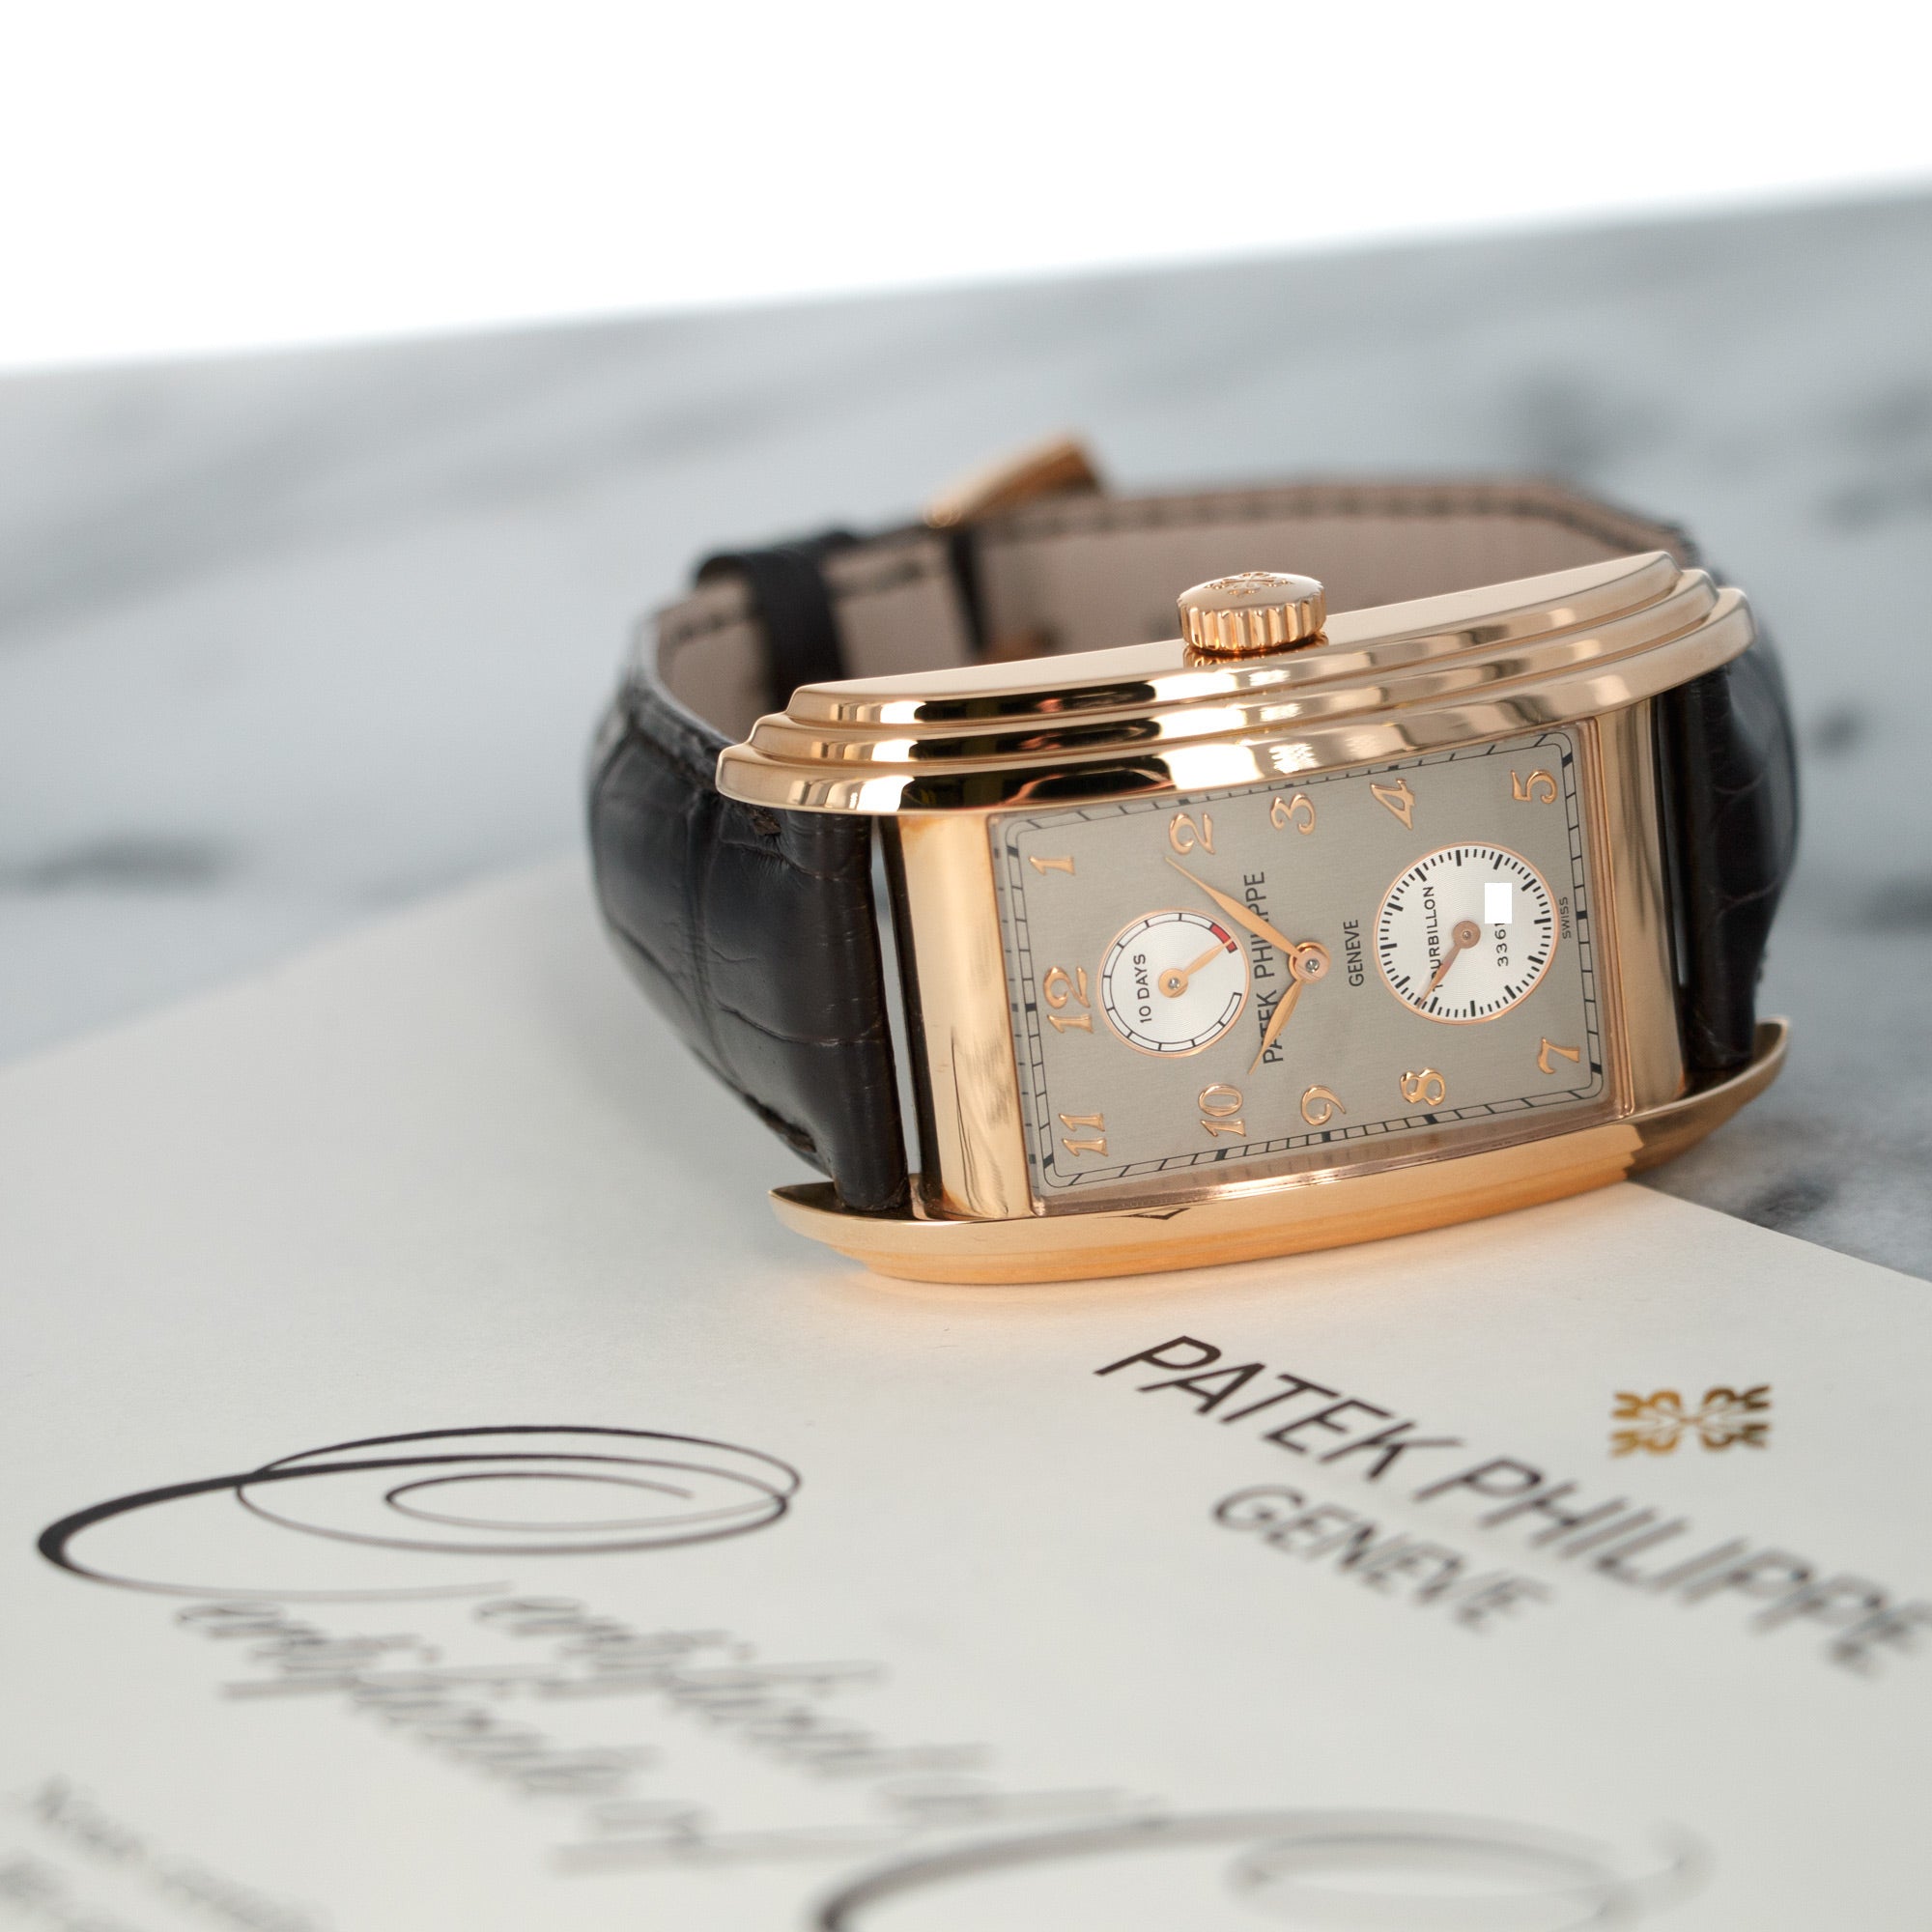 Patek Philippe - Patek Philippe Rose Gold 10-Day Tourbillon Watch, Ref. 5101 - The Keystone Watches